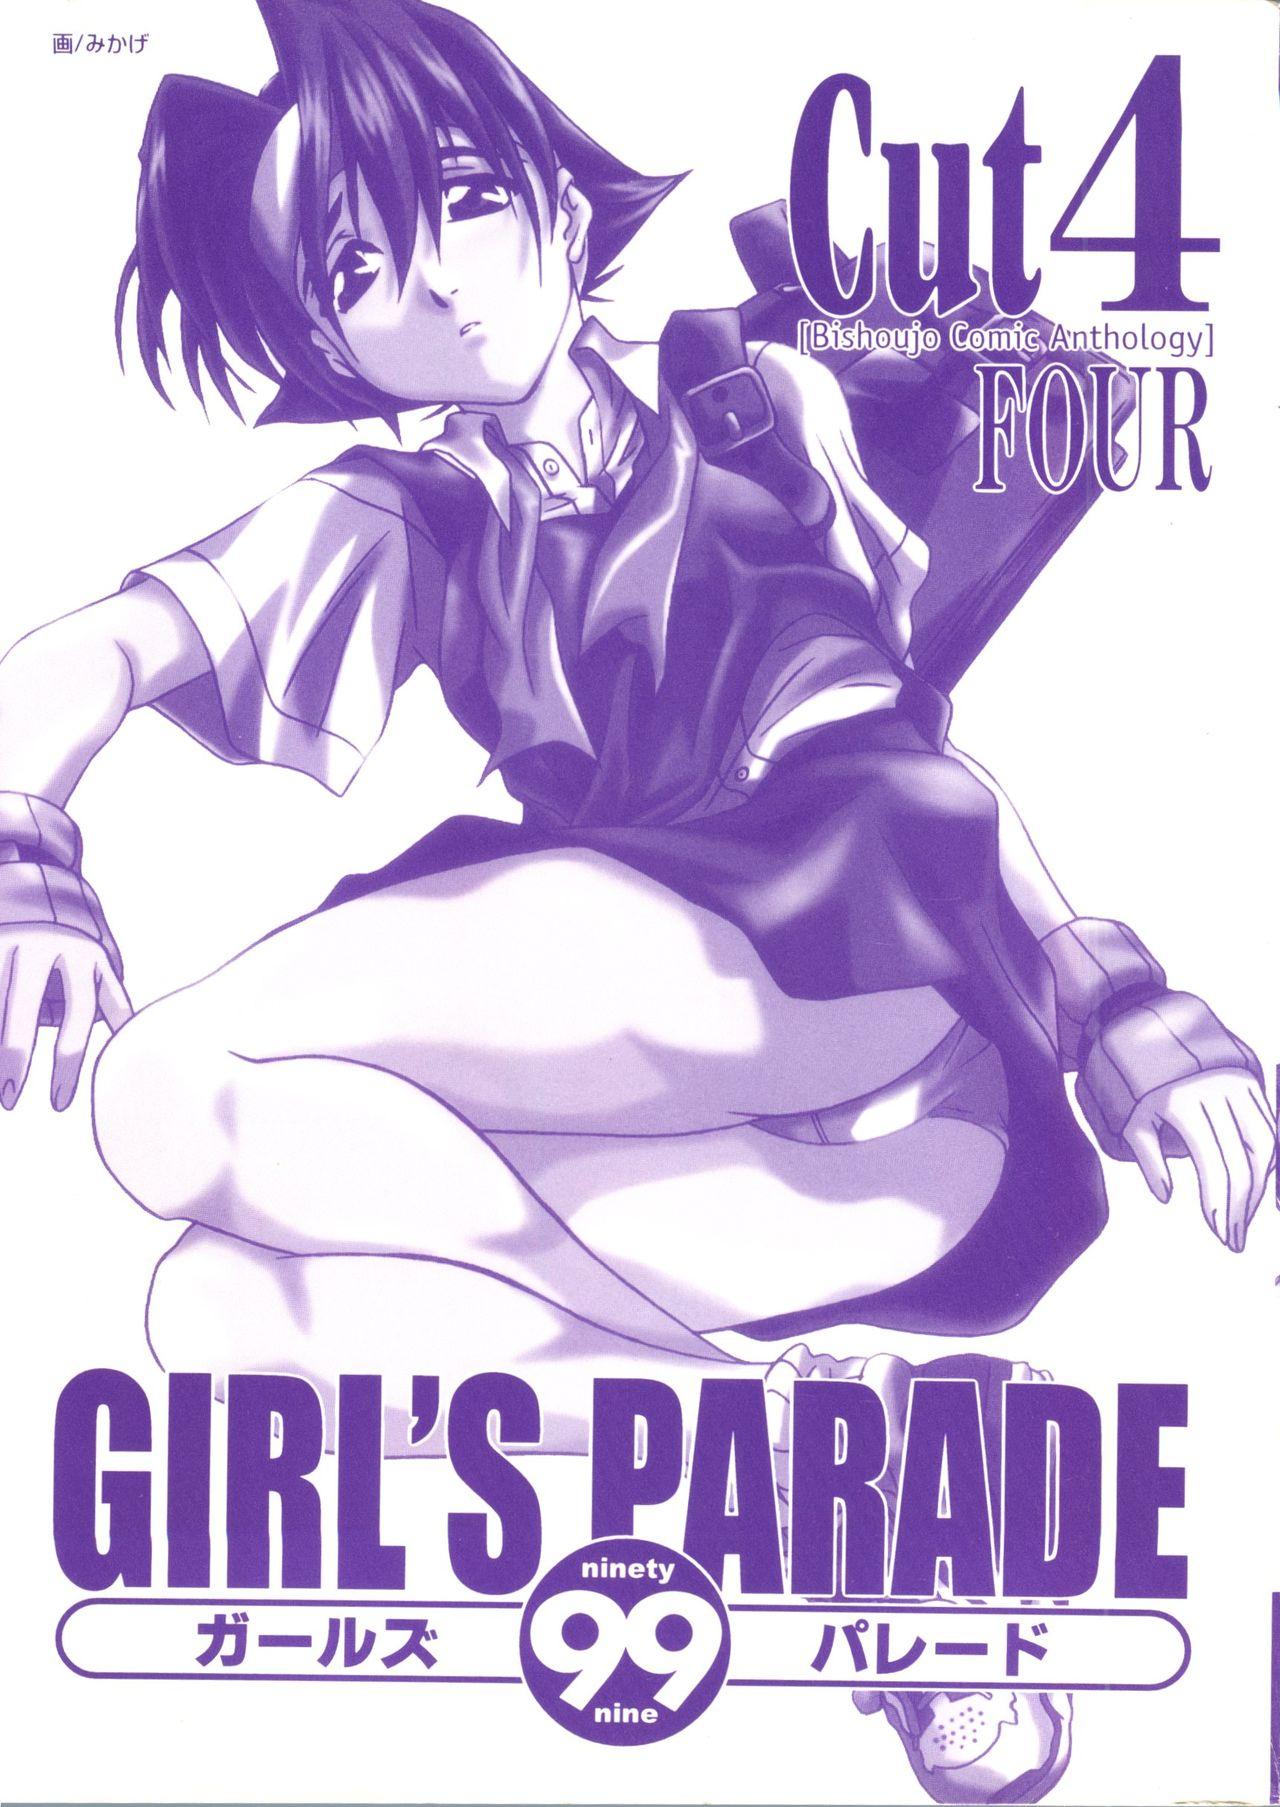 Celebrity Nudes Girl's Parade 99 Cut 4 - Samurai spirits Rival schools Revolutionary girl utena Star gladiator Ruiva - Page 2